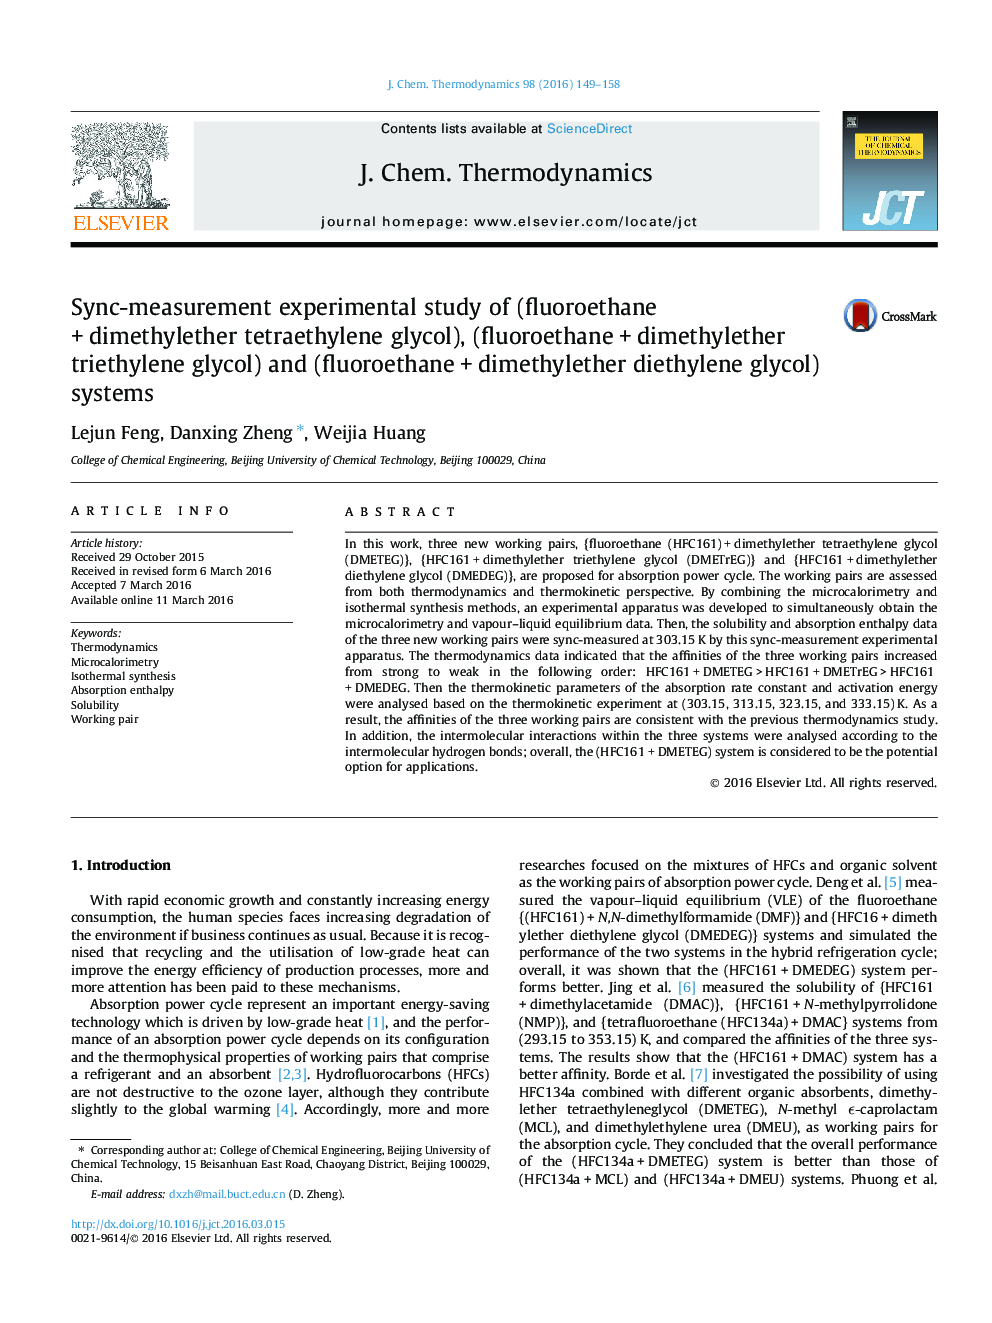 Sync-measurement experimental study of (fluoroethane + dimethylether tetraethylene glycol), (fluoroethane + dimethylether triethylene glycol) and (fluoroethane + dimethylether diethylene glycol) systems